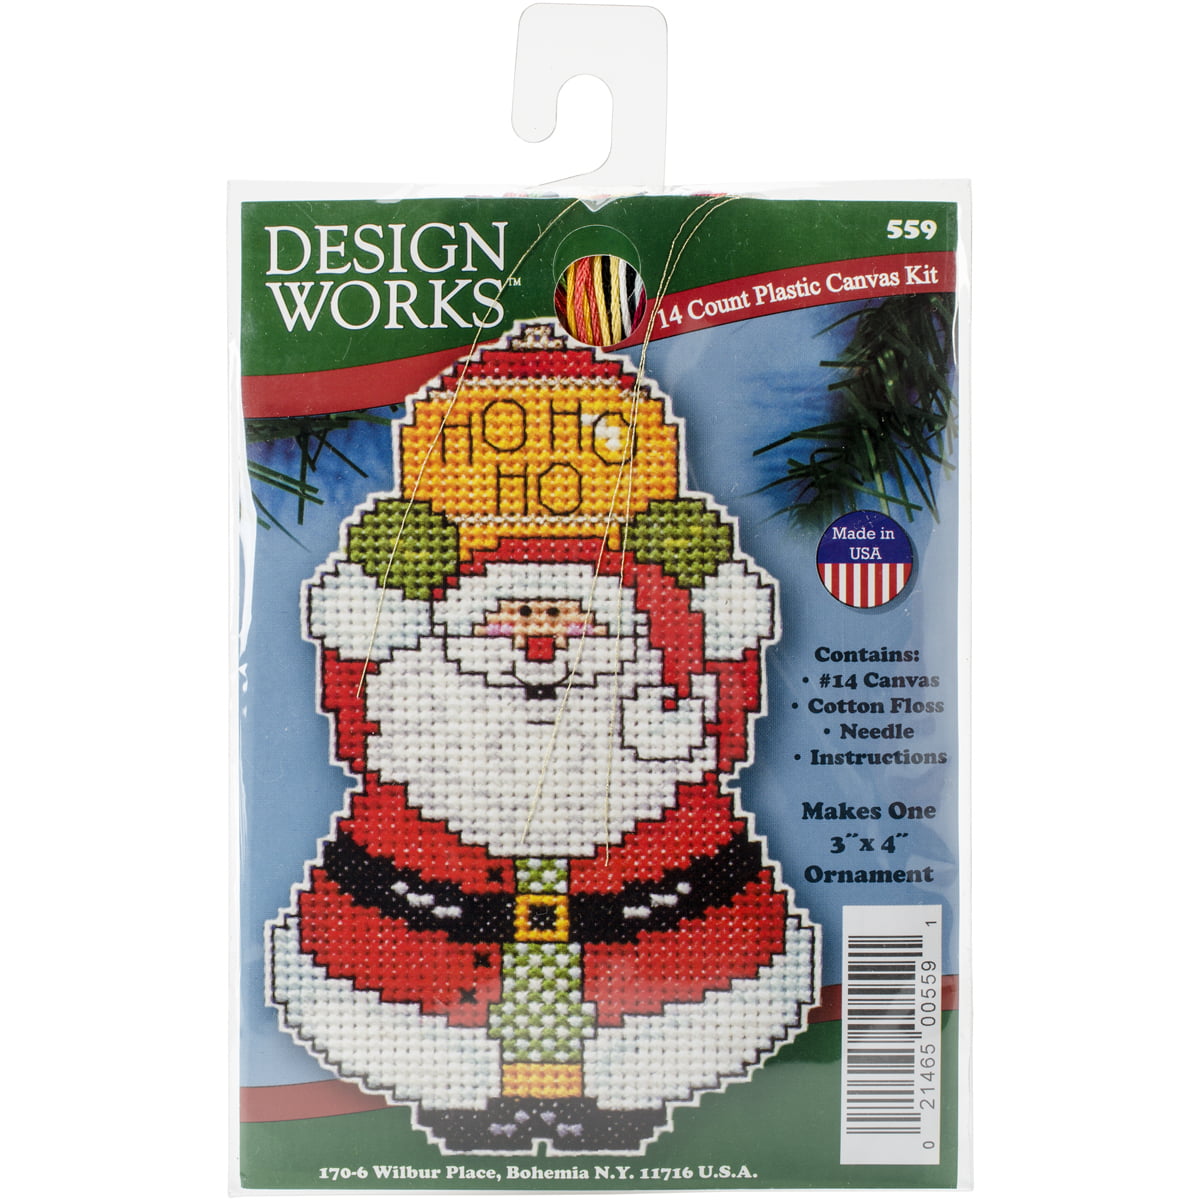 Design Works HO HO Santa Ornament Plastic Canvas Kit 4X3 14 Count